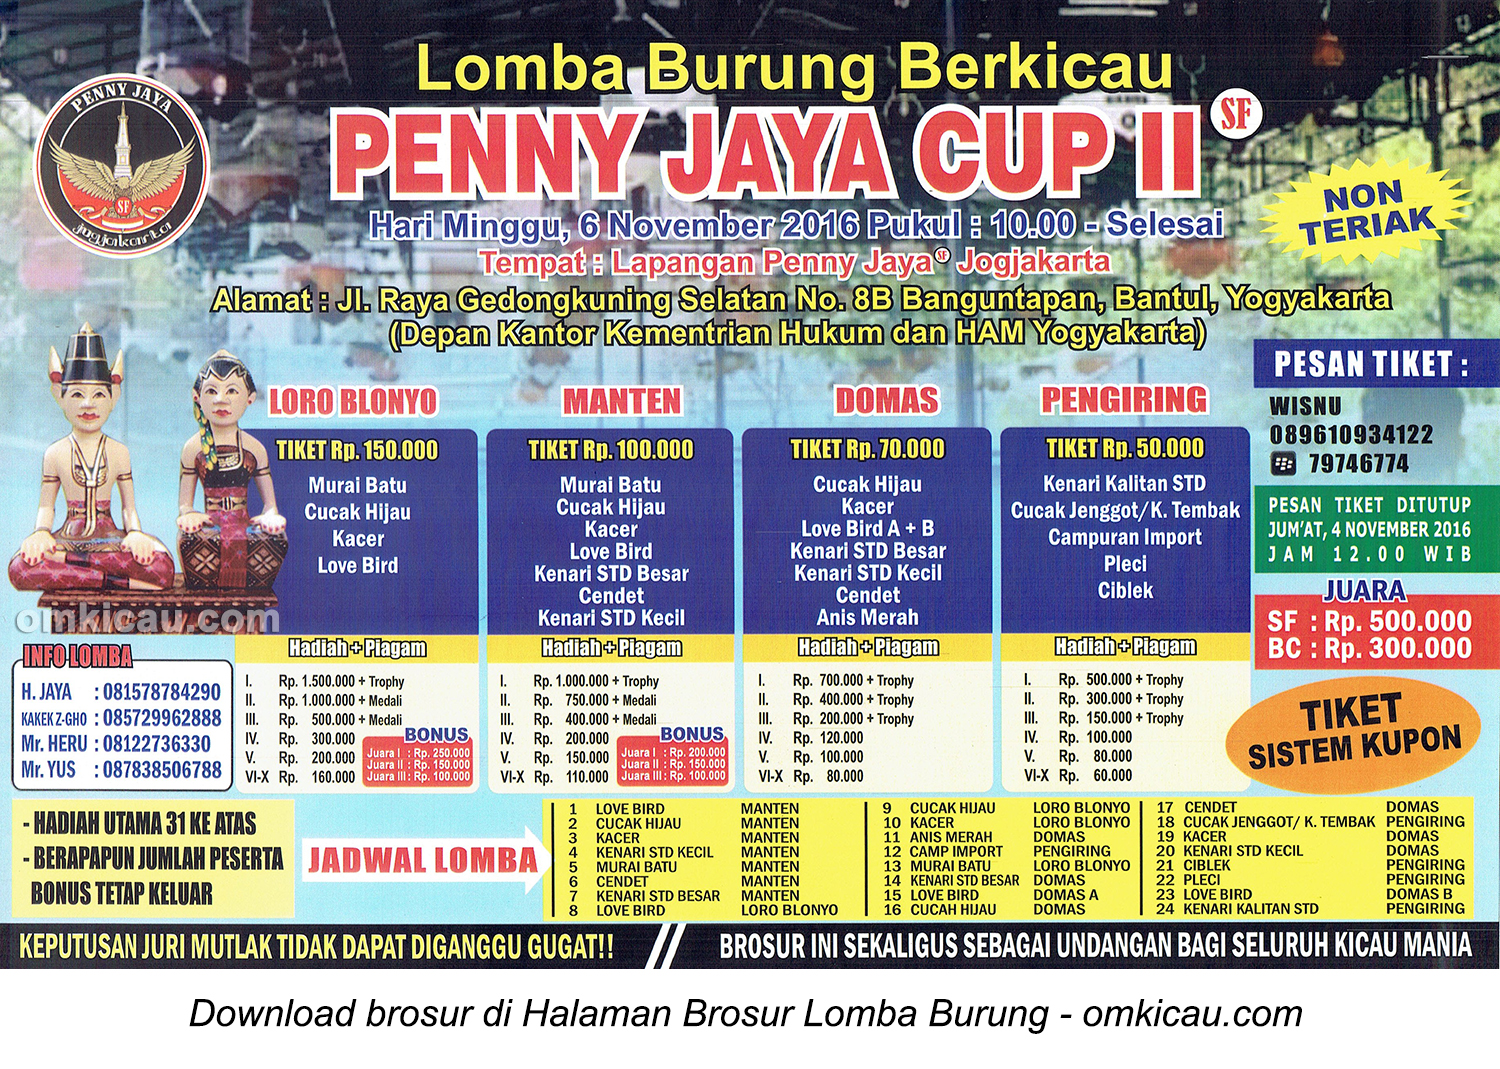 Brosur Lomba Burung Berkicau Penny Jaya Cup II, Jogja, 6 November 2016